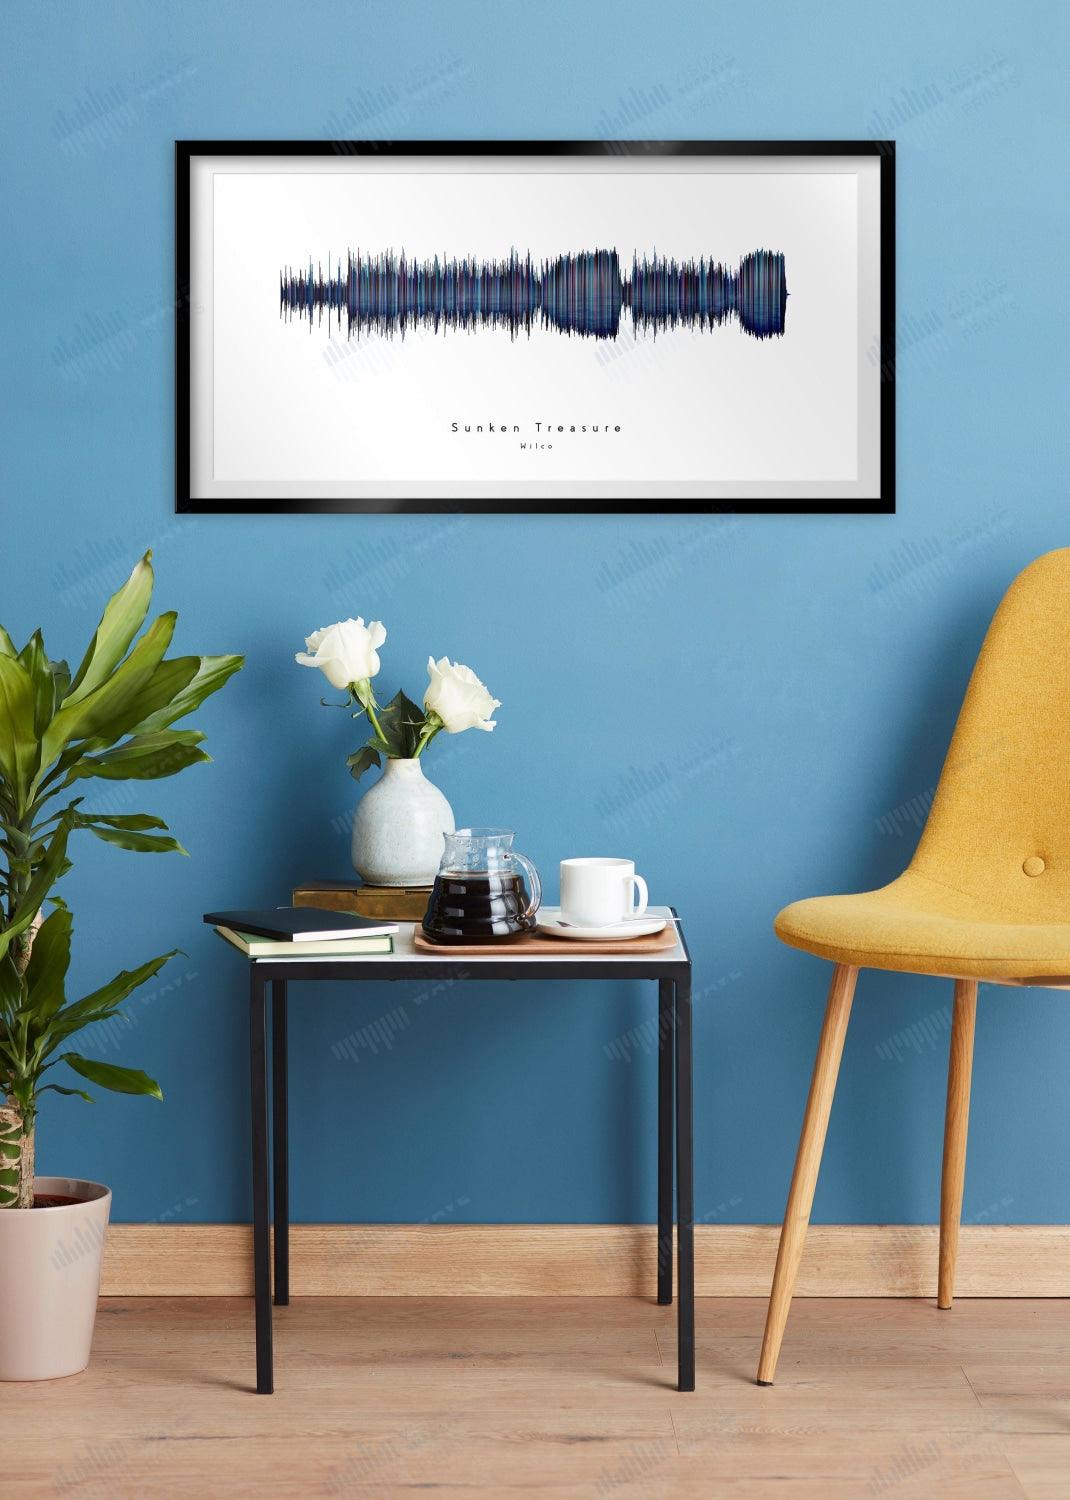 Sunken Treasure by Wilco - Visual Wave Prints